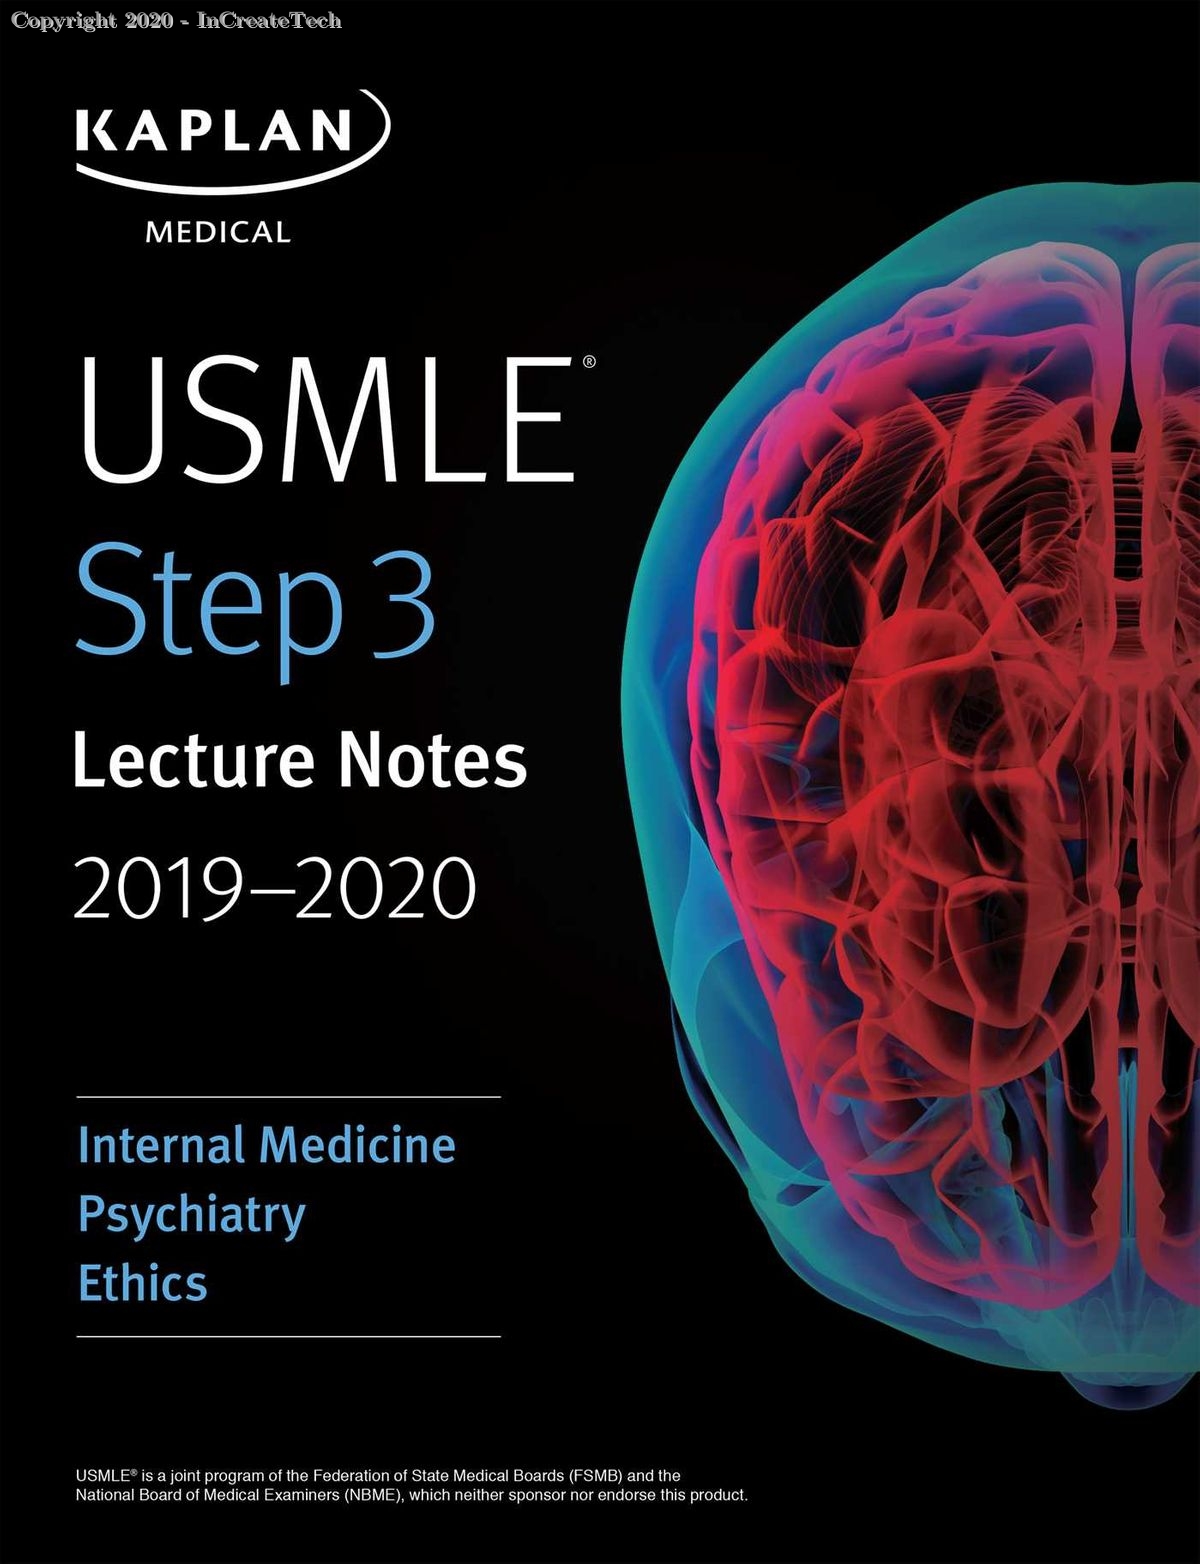 kaplan medical step 3 lecture notew 2019-2020